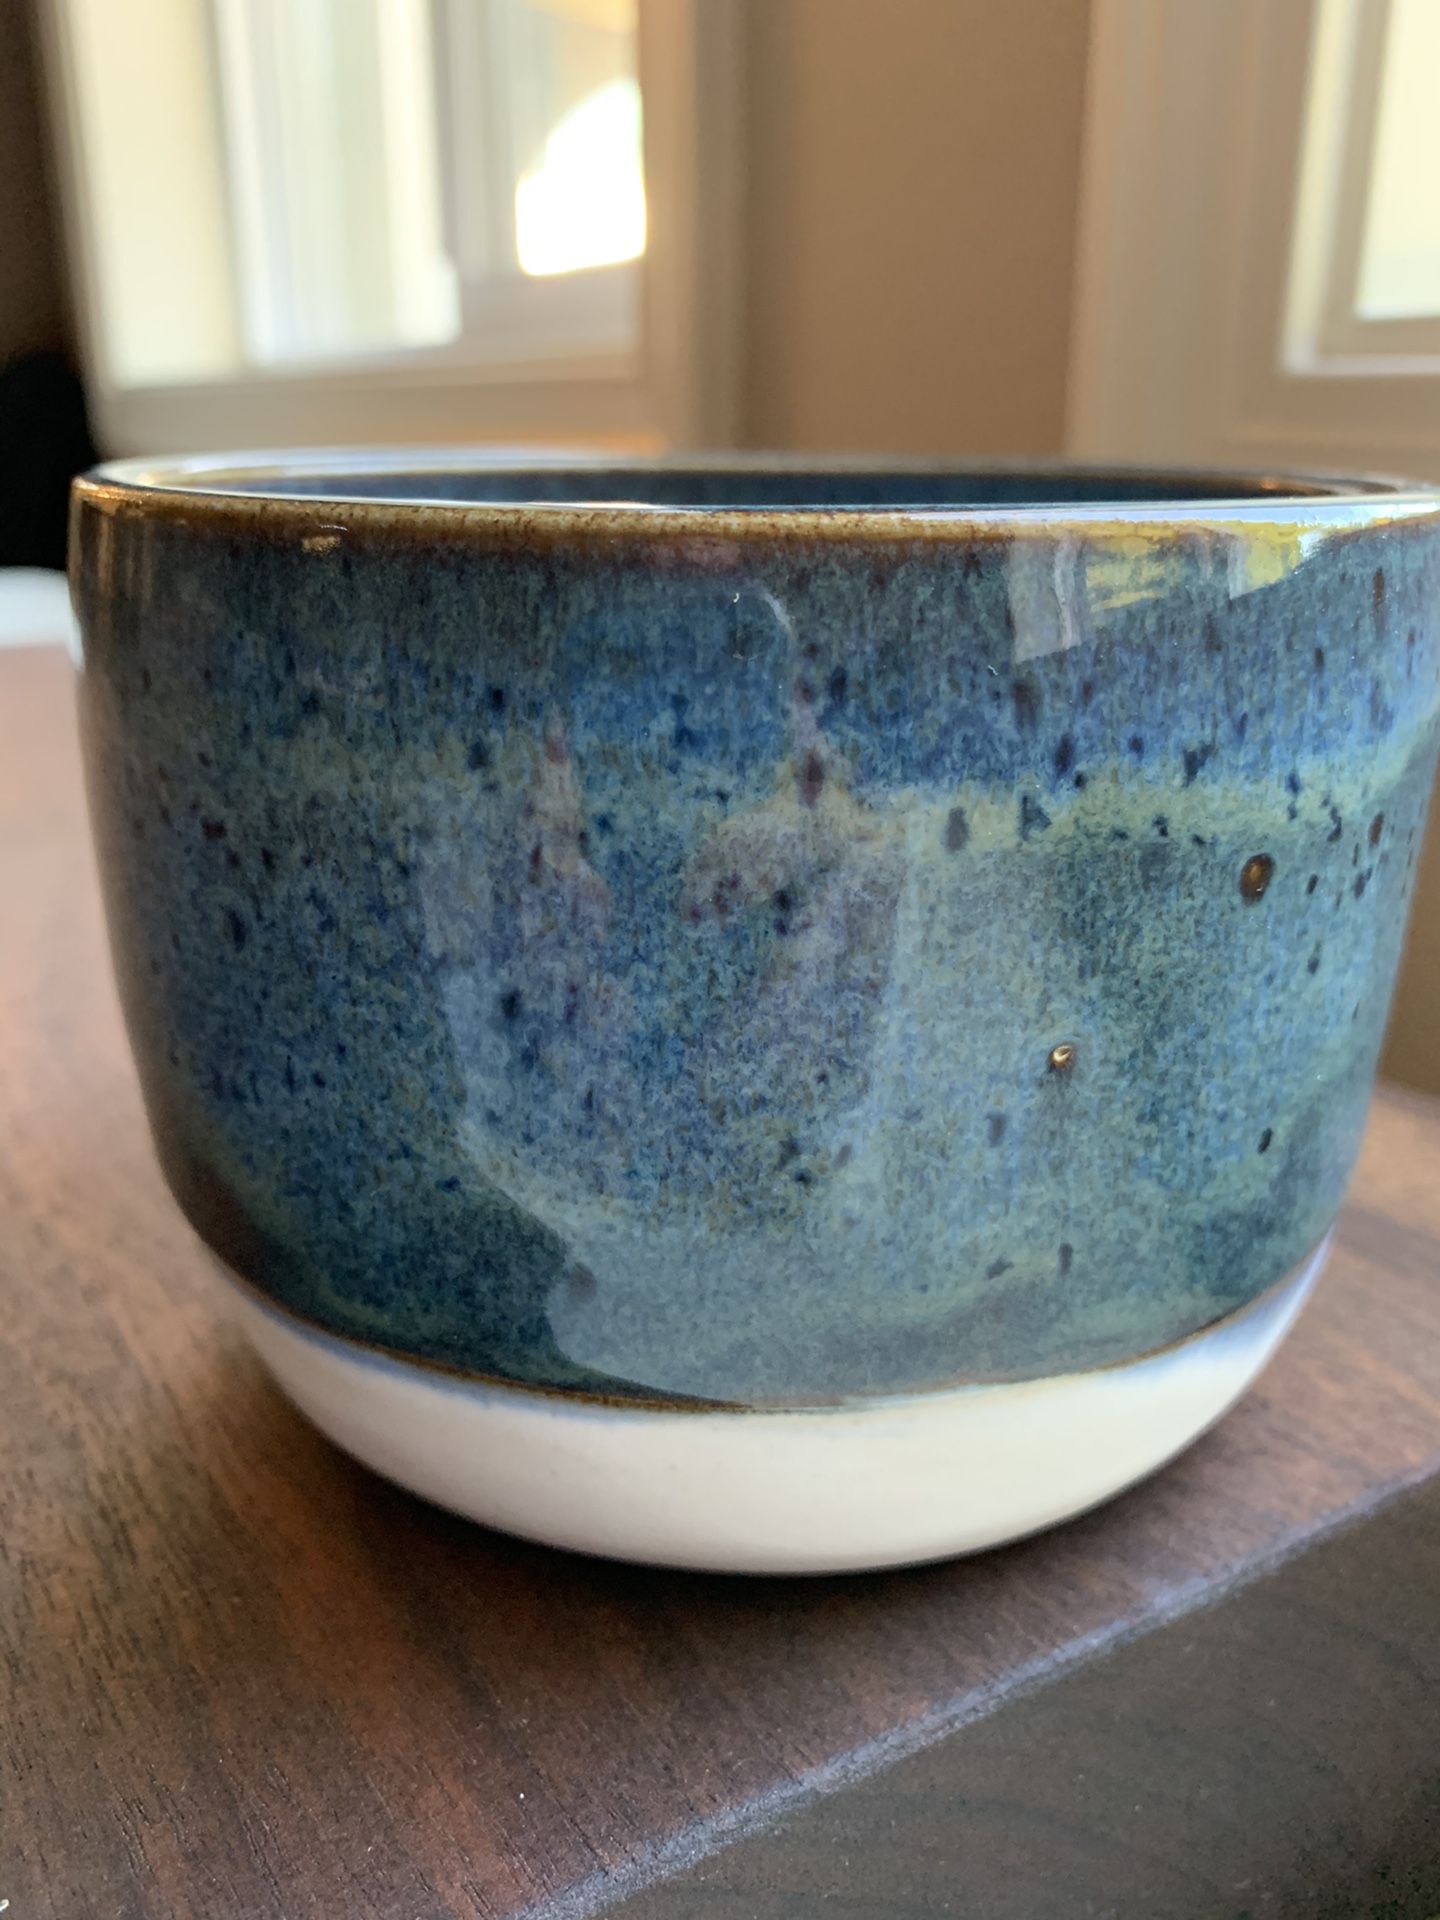 Unique handmade ceramic speckled blue and white plant pot